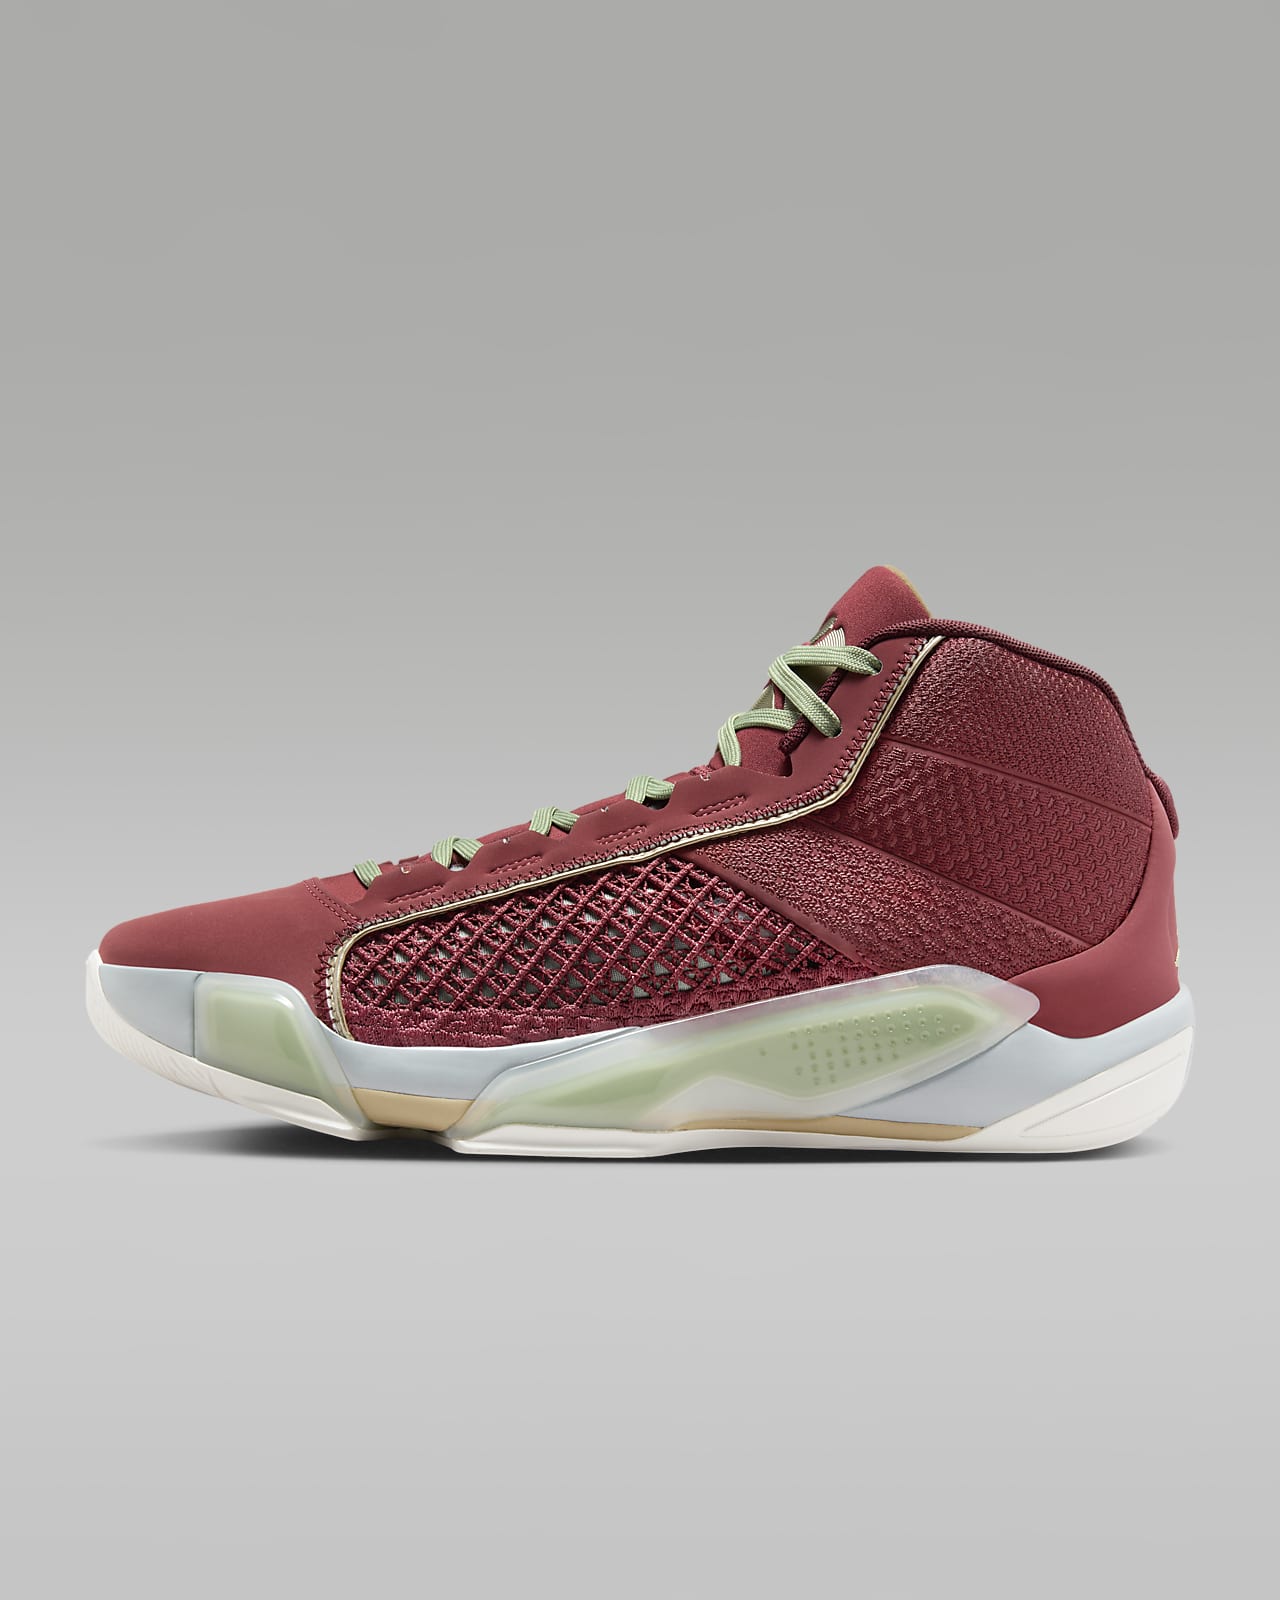 Air Jordan XXXVIII Lunar New Year PF 籃球鞋。Nike TW